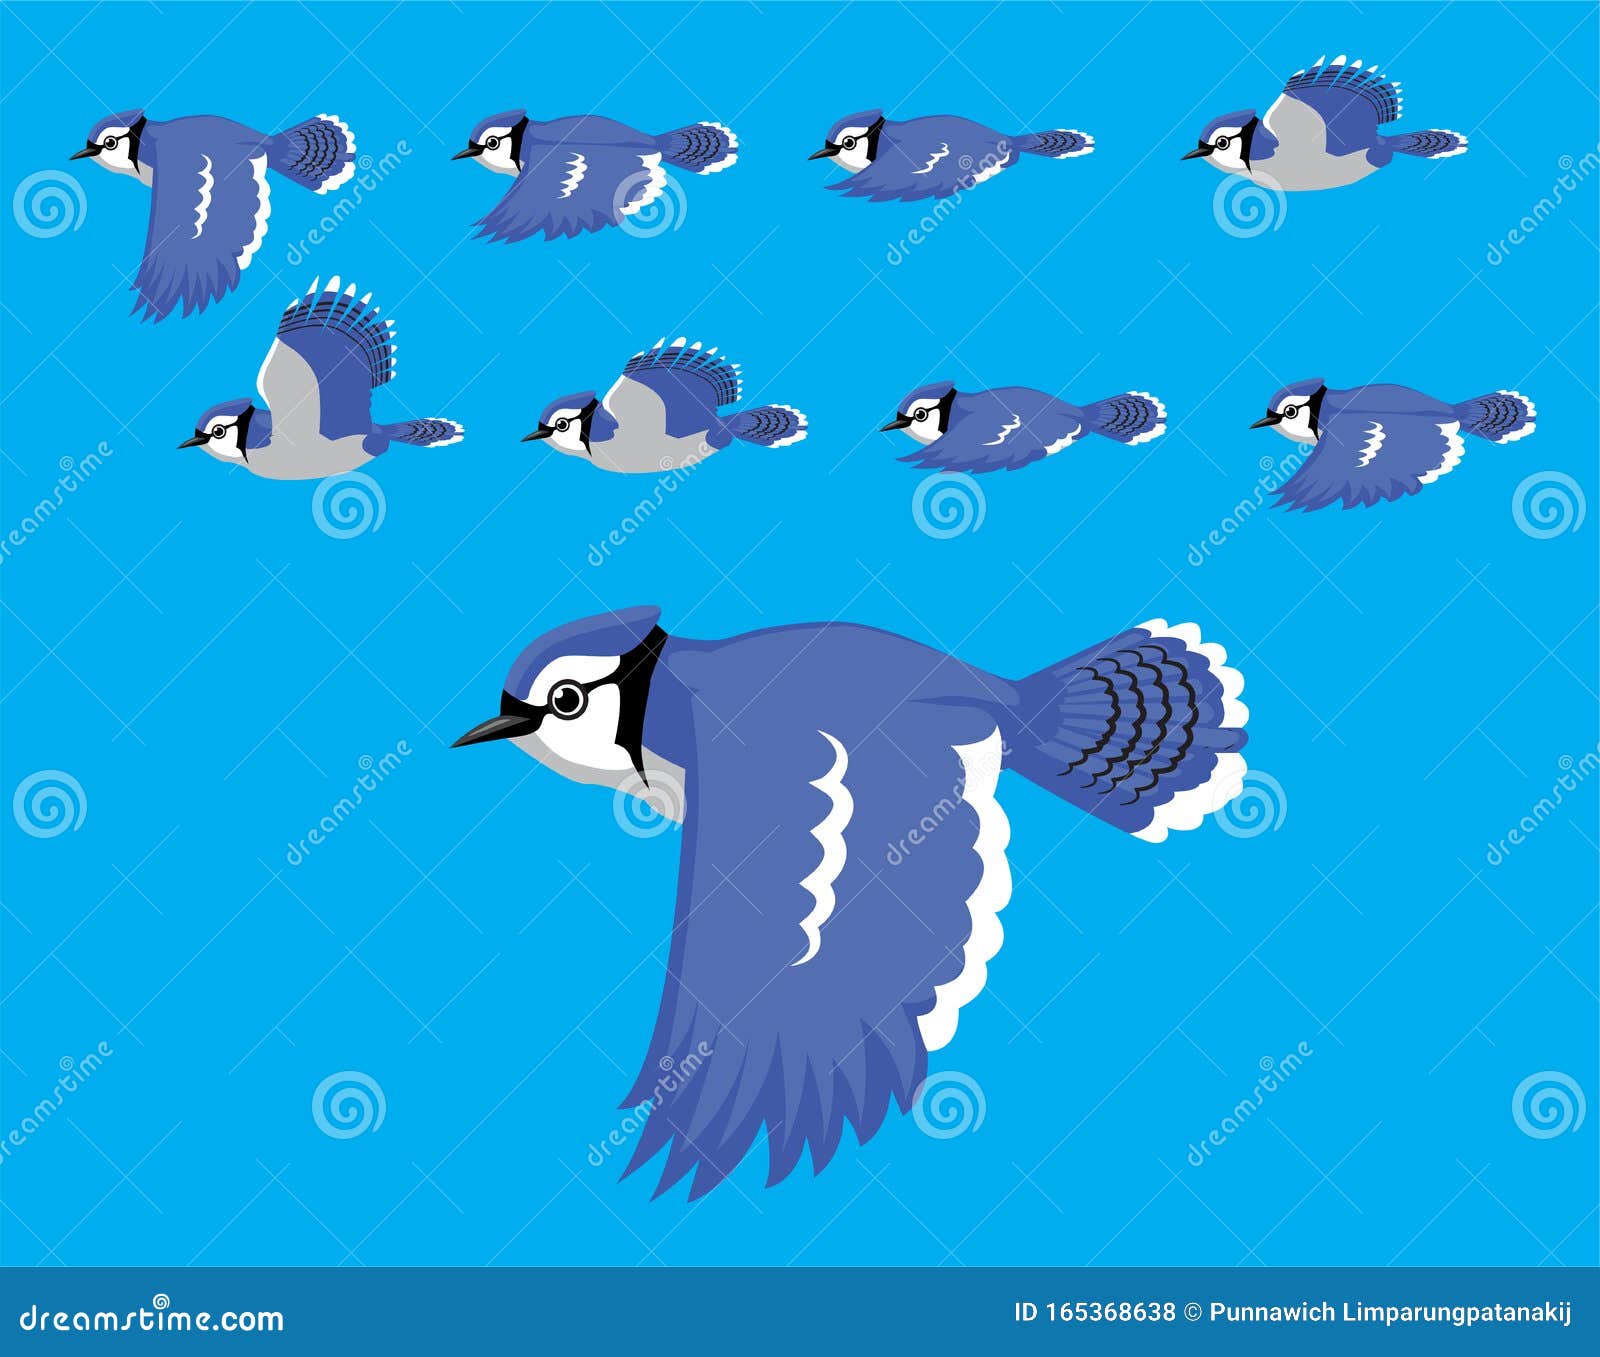 Bird Flying Frame Animation Stock Illustrations – 186 Bird Flying Frame  Animation Stock Illustrations, Vectors & Clipart - Dreamstime